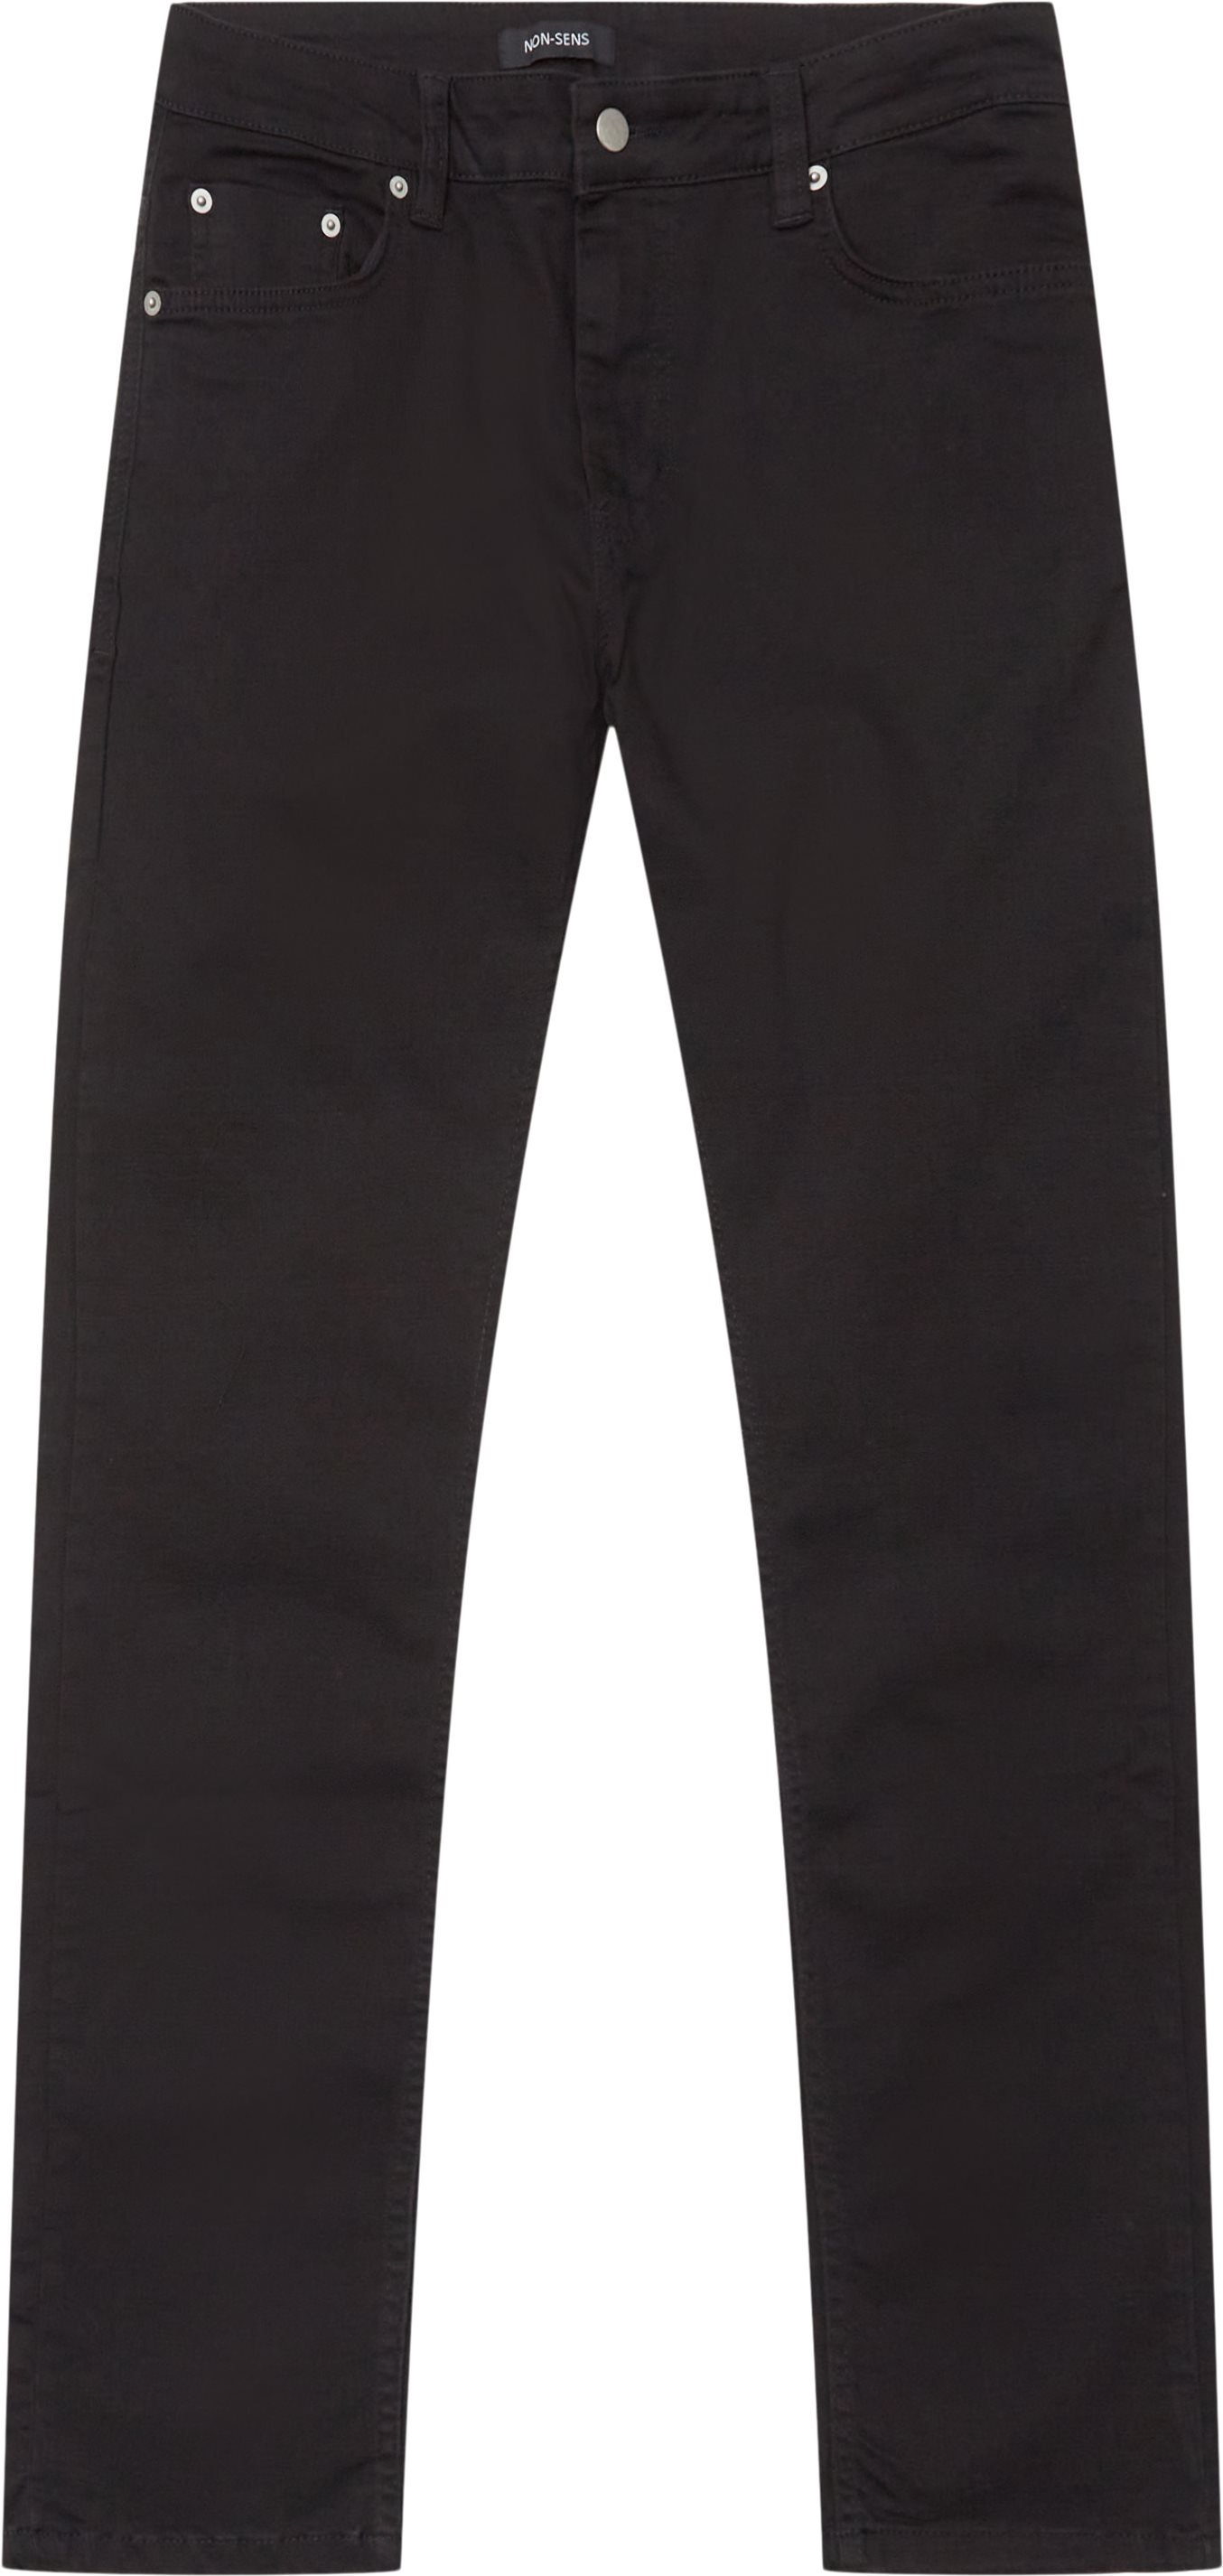 Jackson Jeans - Jeans - Slim fit - Svart